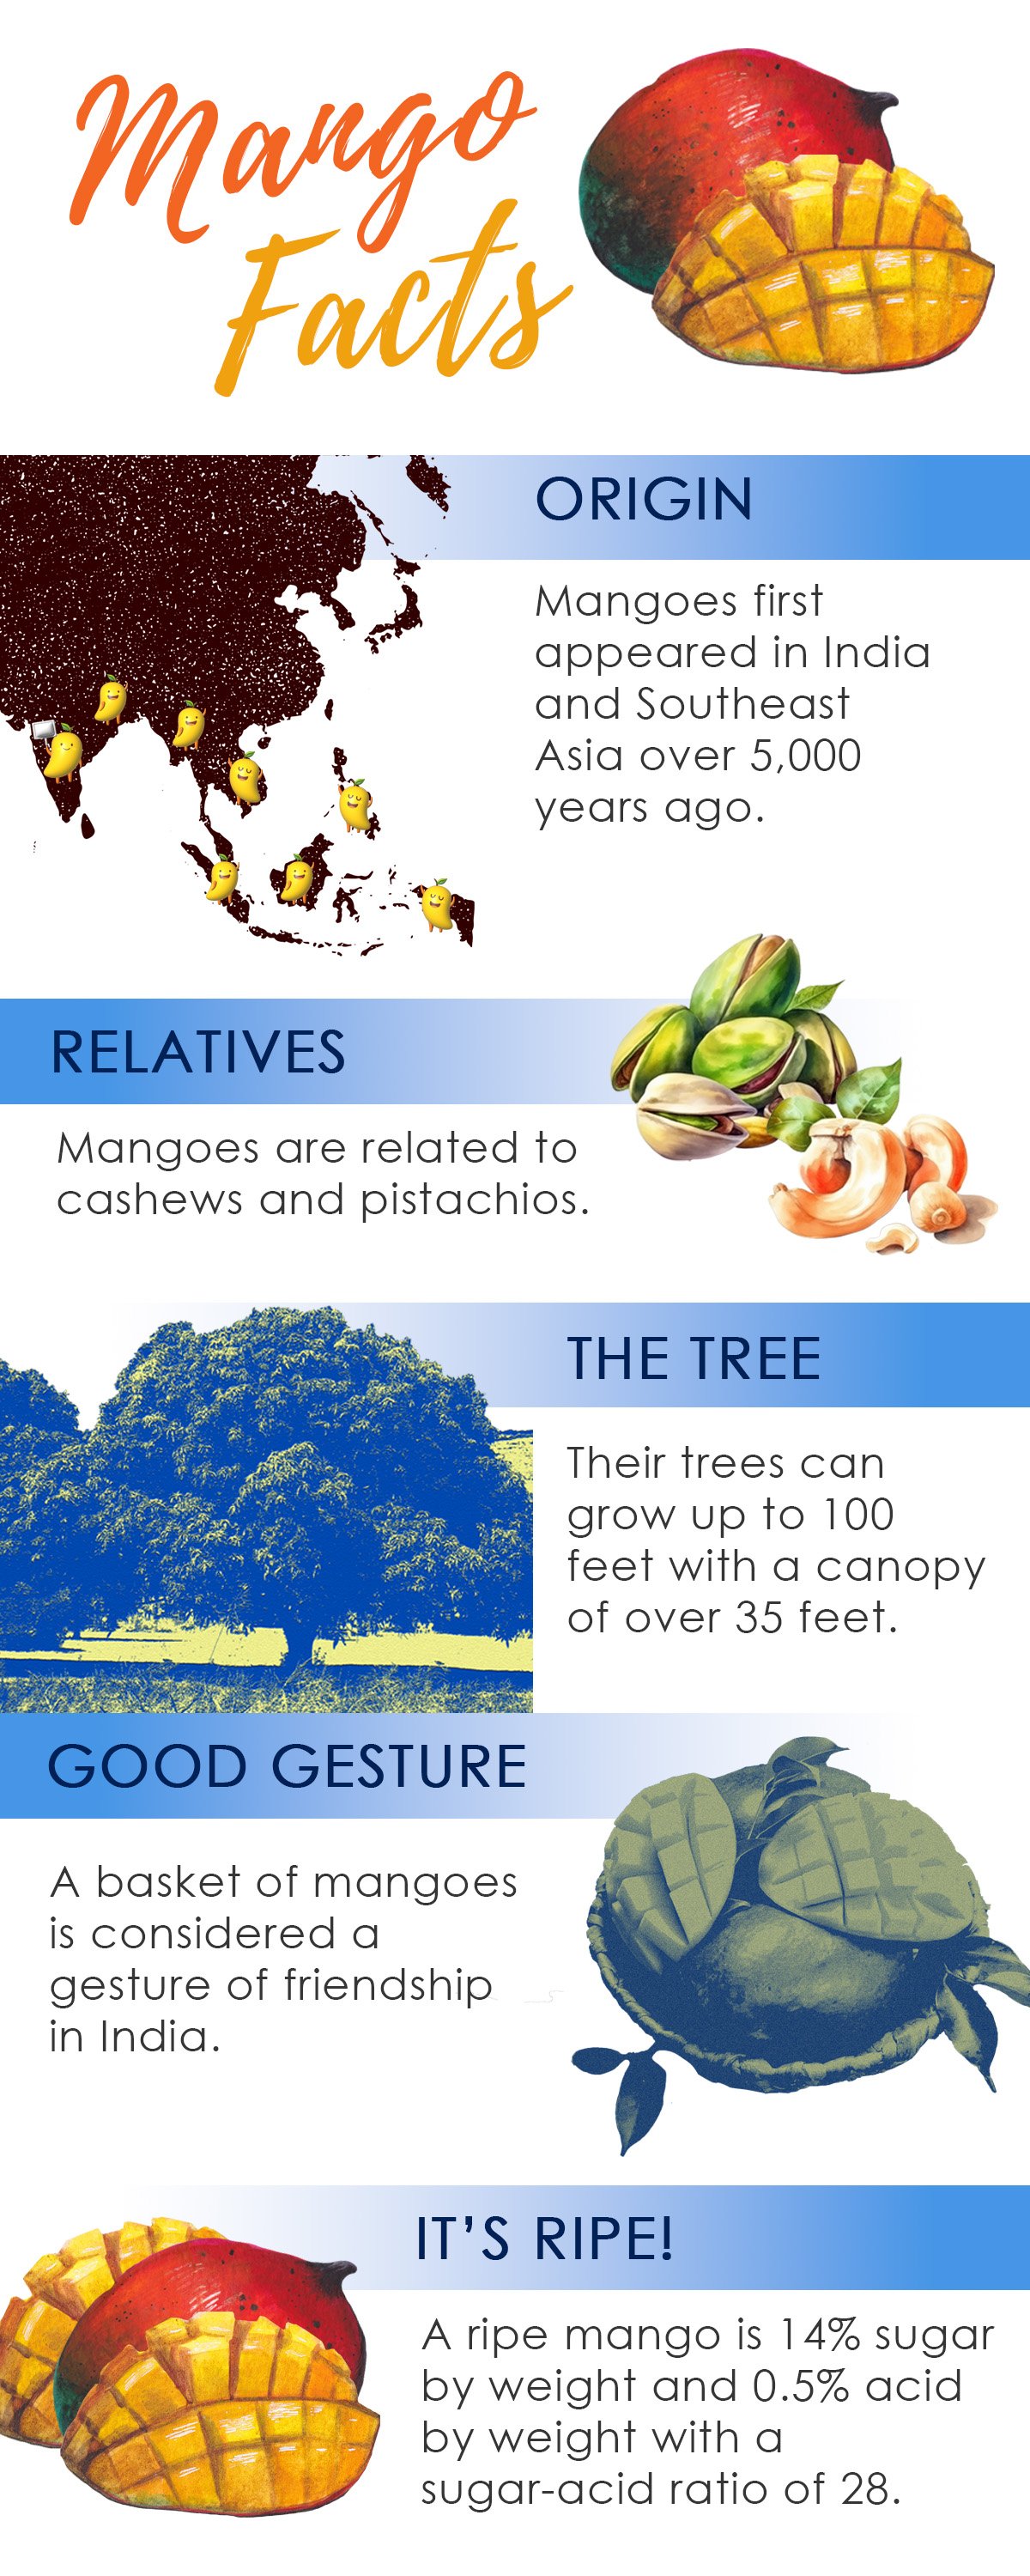 mango facts infographic